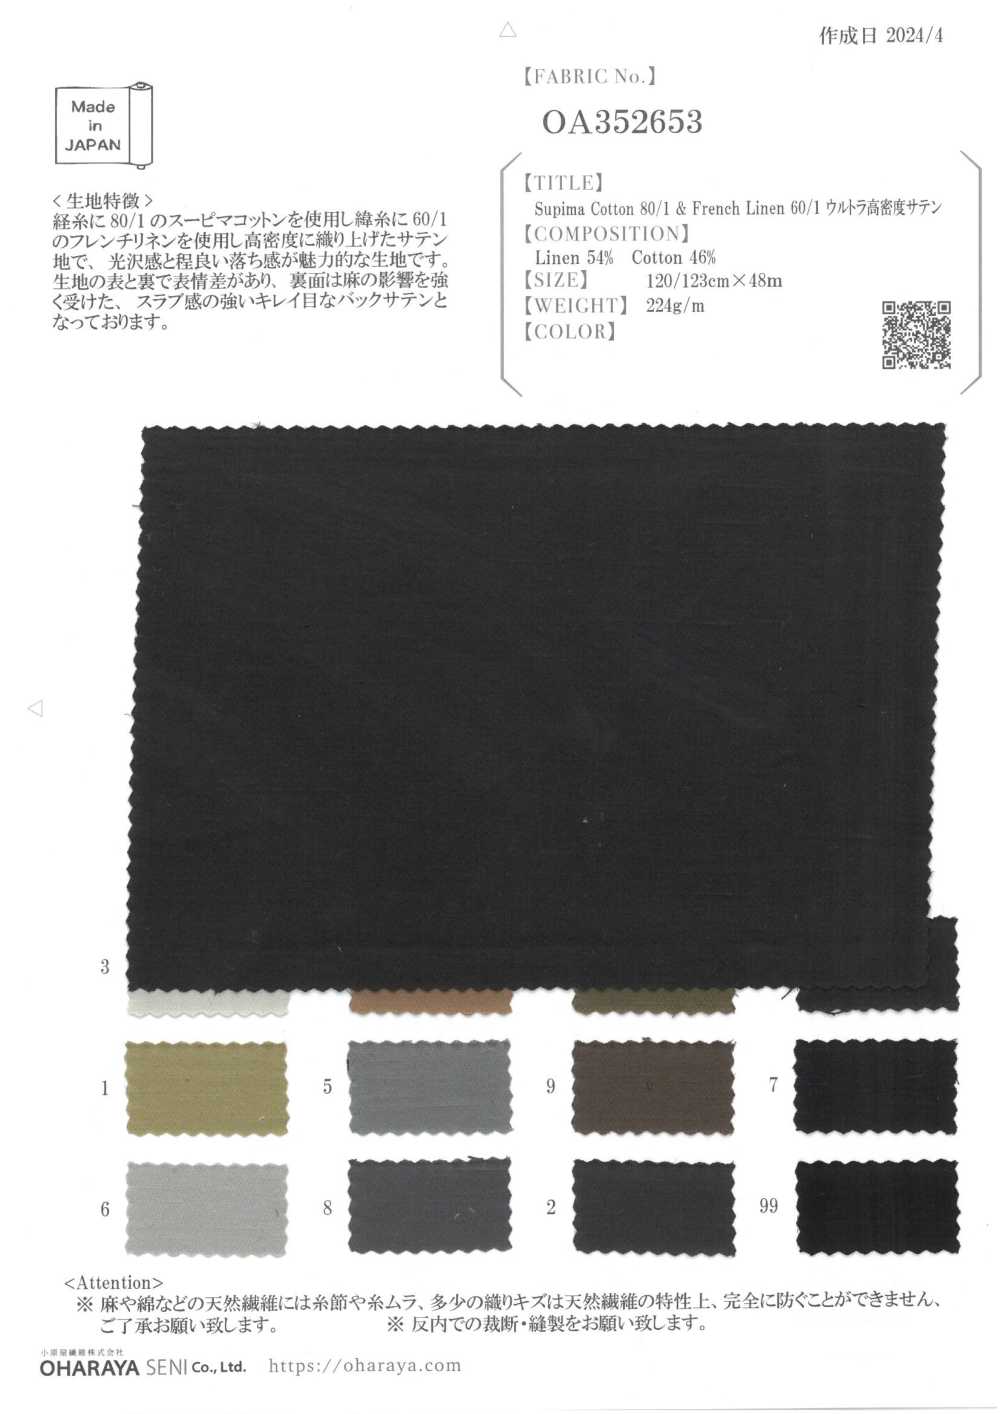 OA352653 Algodón Supima 80/1 Y Lino Francés 60/1 Satén Ultra Denso[Fabrica Textil] Oharayaseni